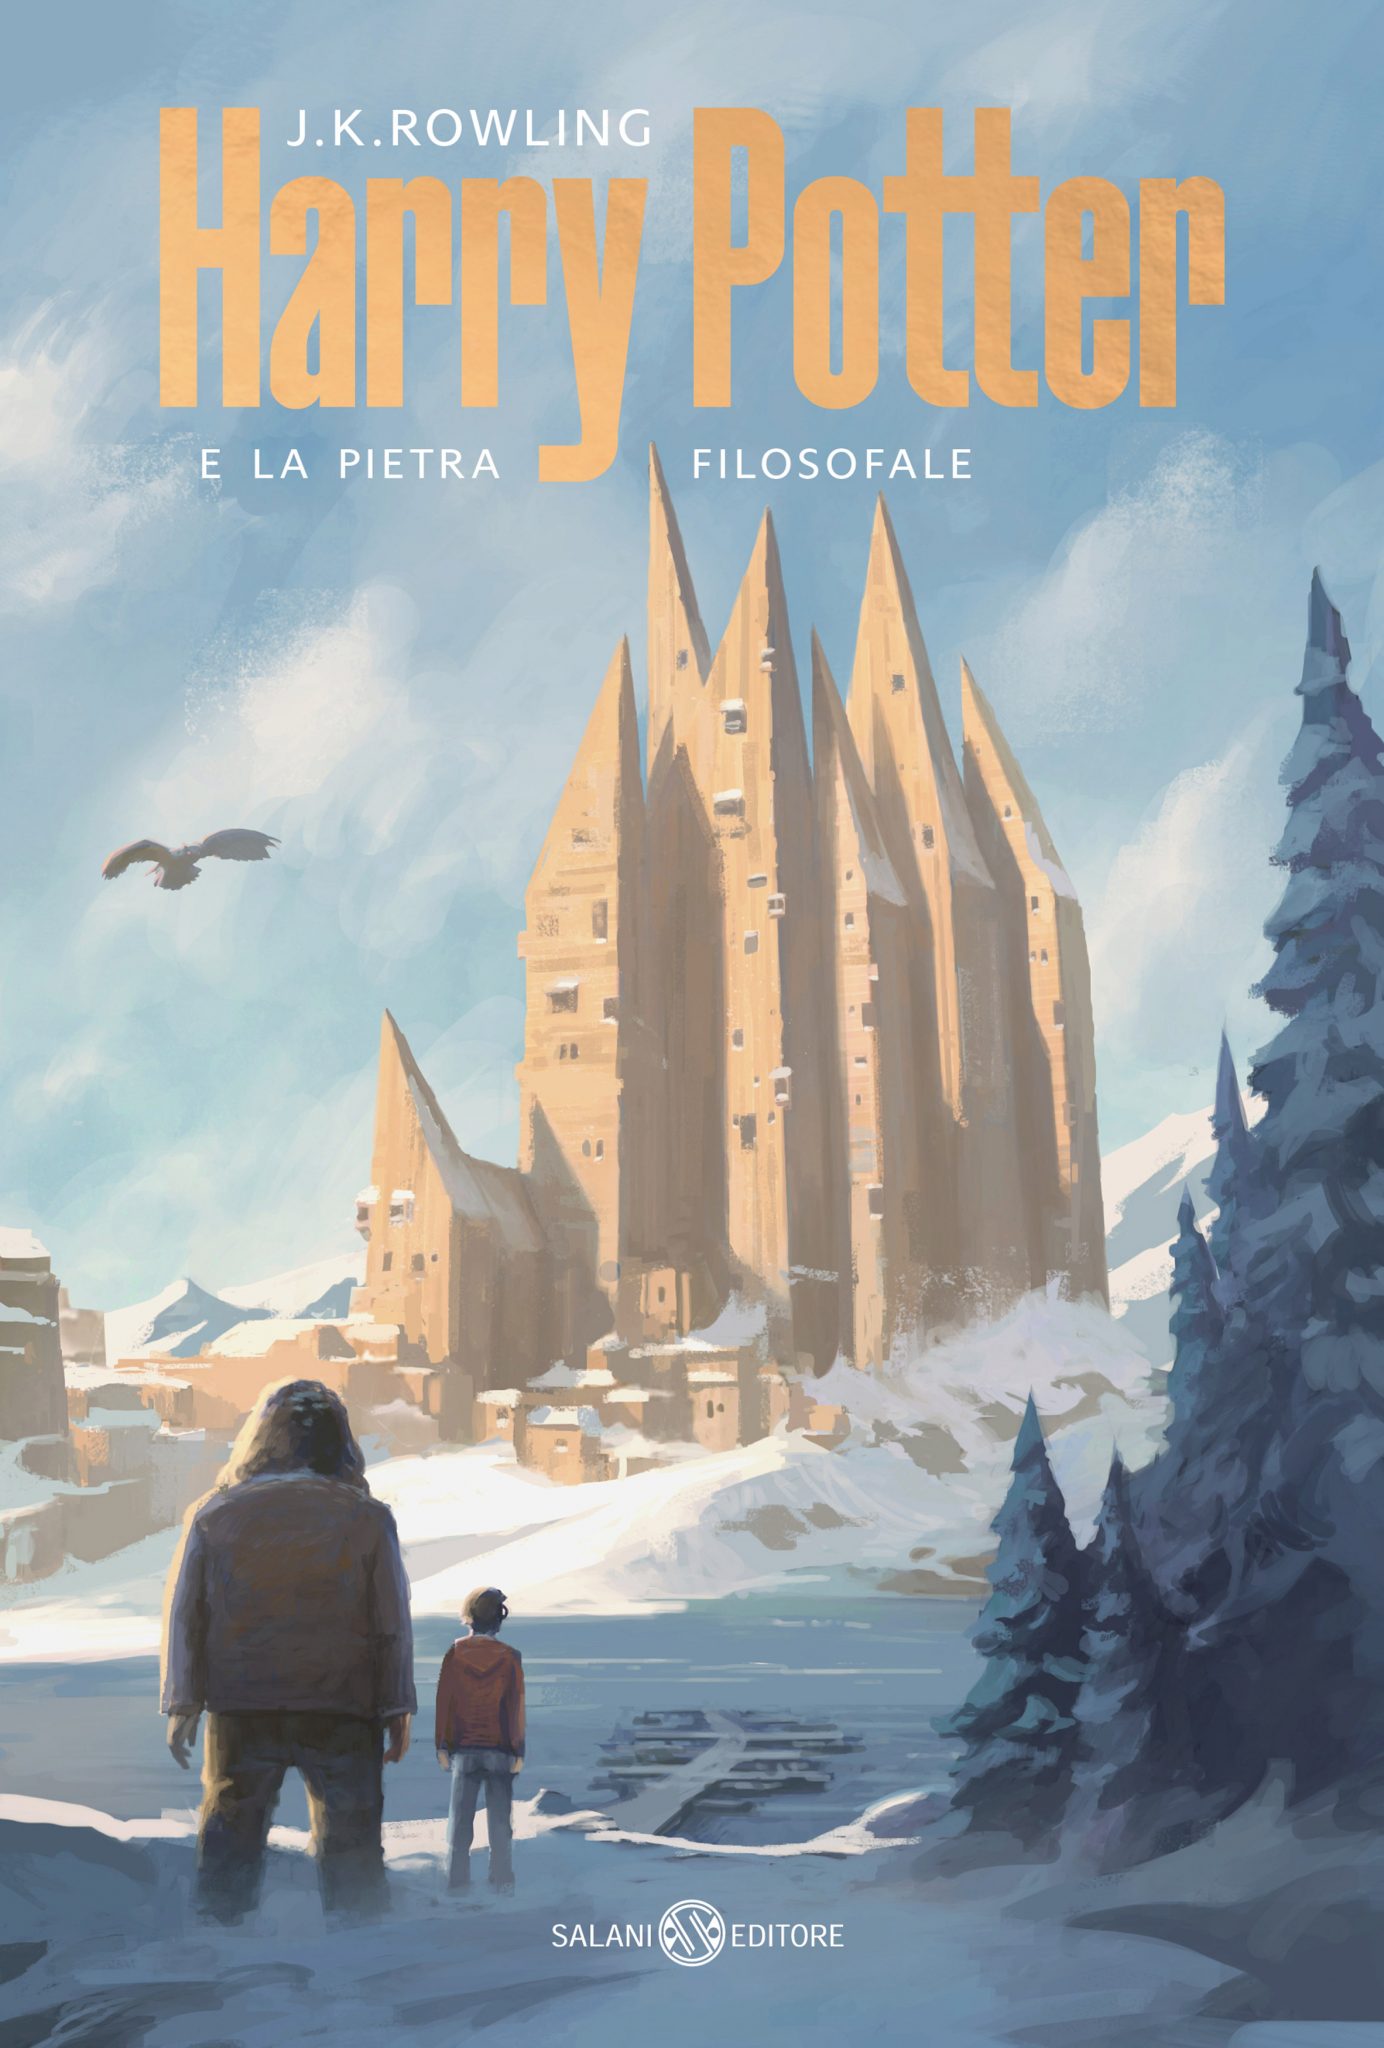 Архитектор Микеле де Лукки перепридумал обложки книг о Гарри Поттере (фото 1)